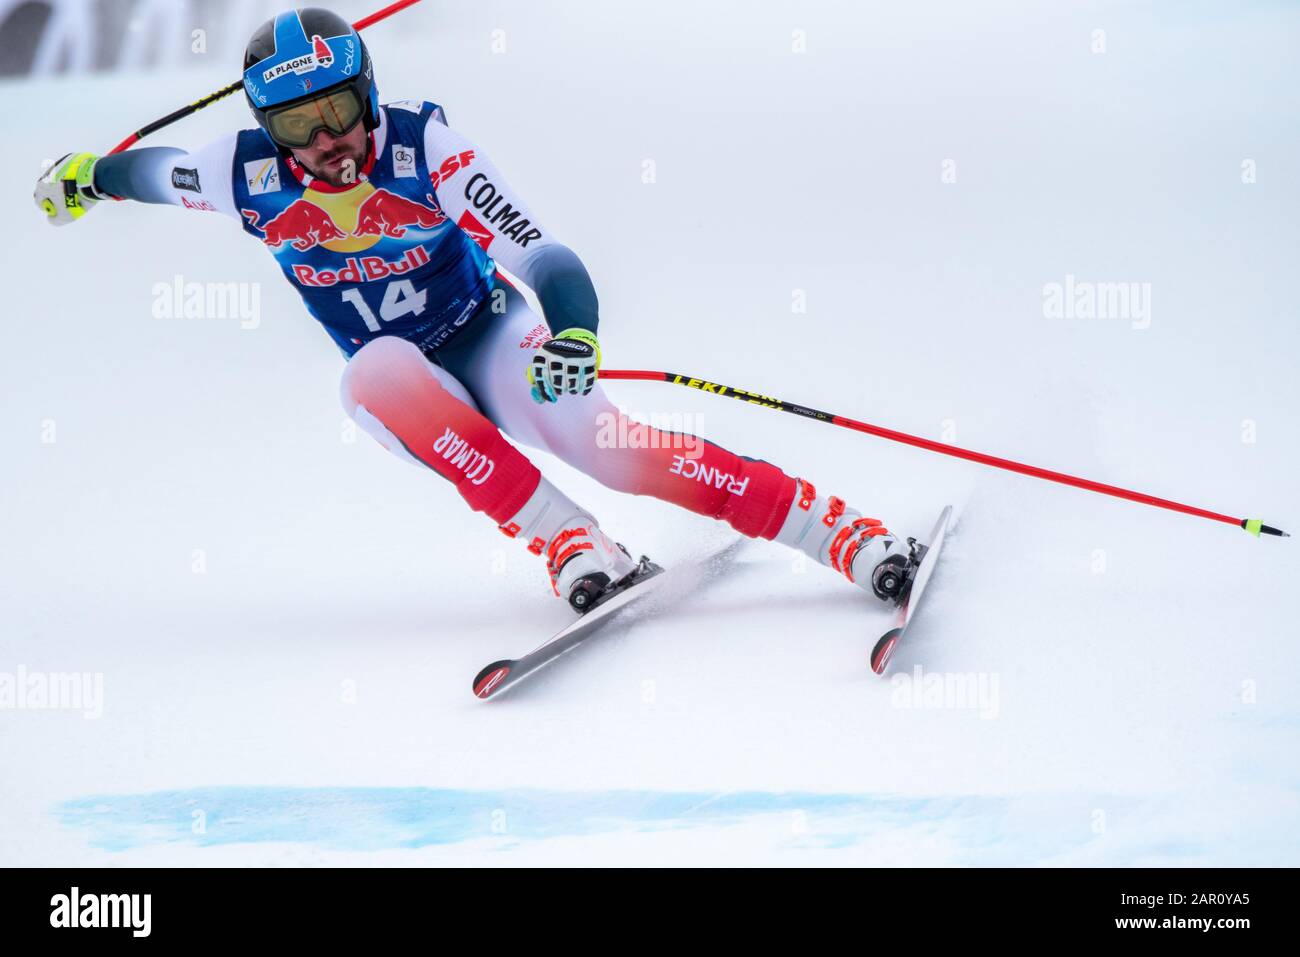 Maxence Muzaton of France at the Ski Alpin: 80. Hahnenkamm Race 2020 - Audi FIS Alpine Ski World Cup - Men's Downhill at the Streif on January 25, 2020 in Kitzbuehel, AUSTRIA. Credit: European Sports Photographic Agency/Alamy Live News Stock Photo